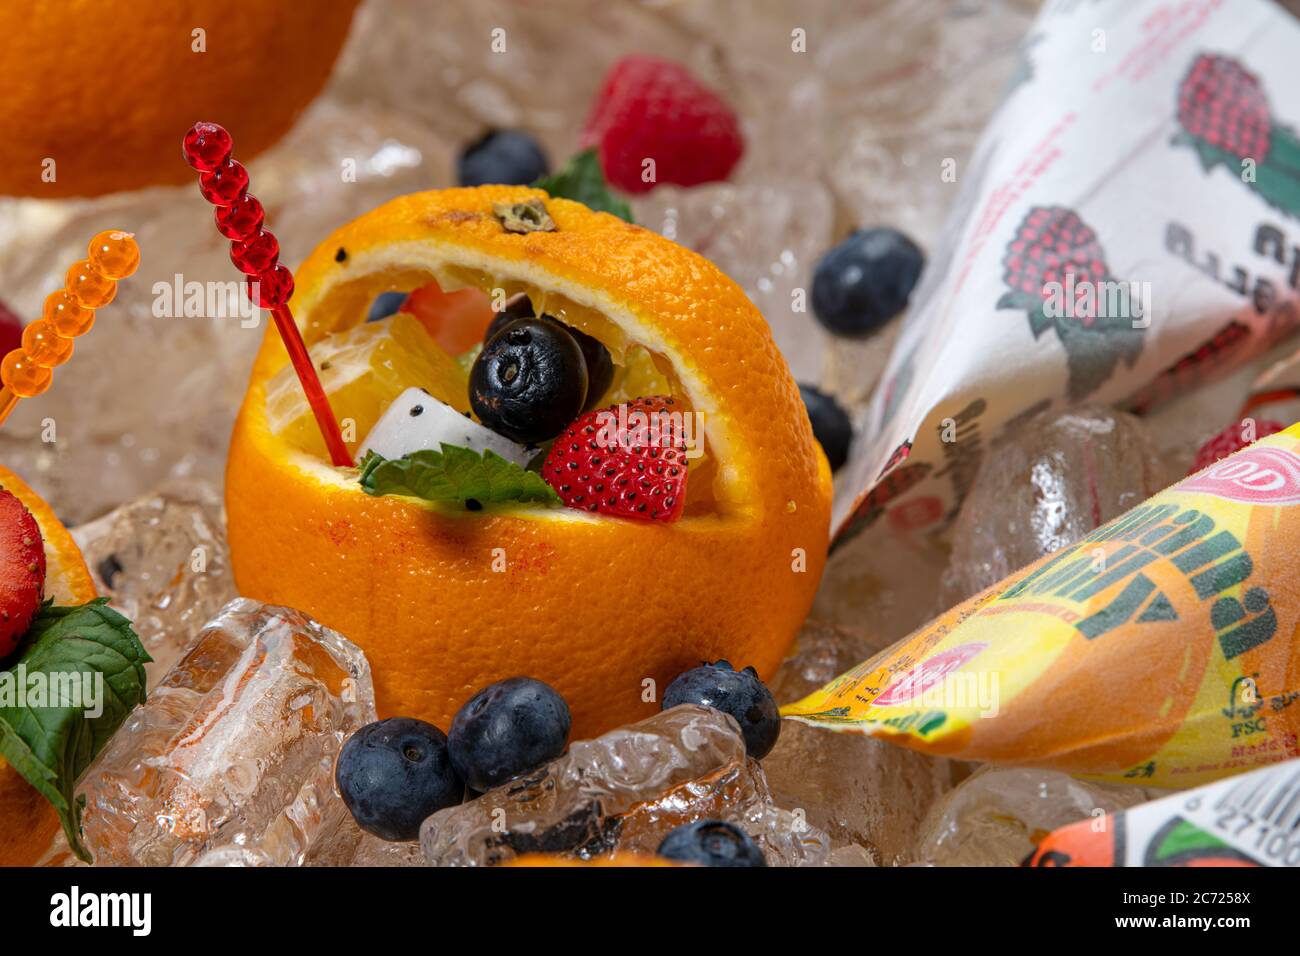 Arreglos de frutas comestibles. Foto de stock